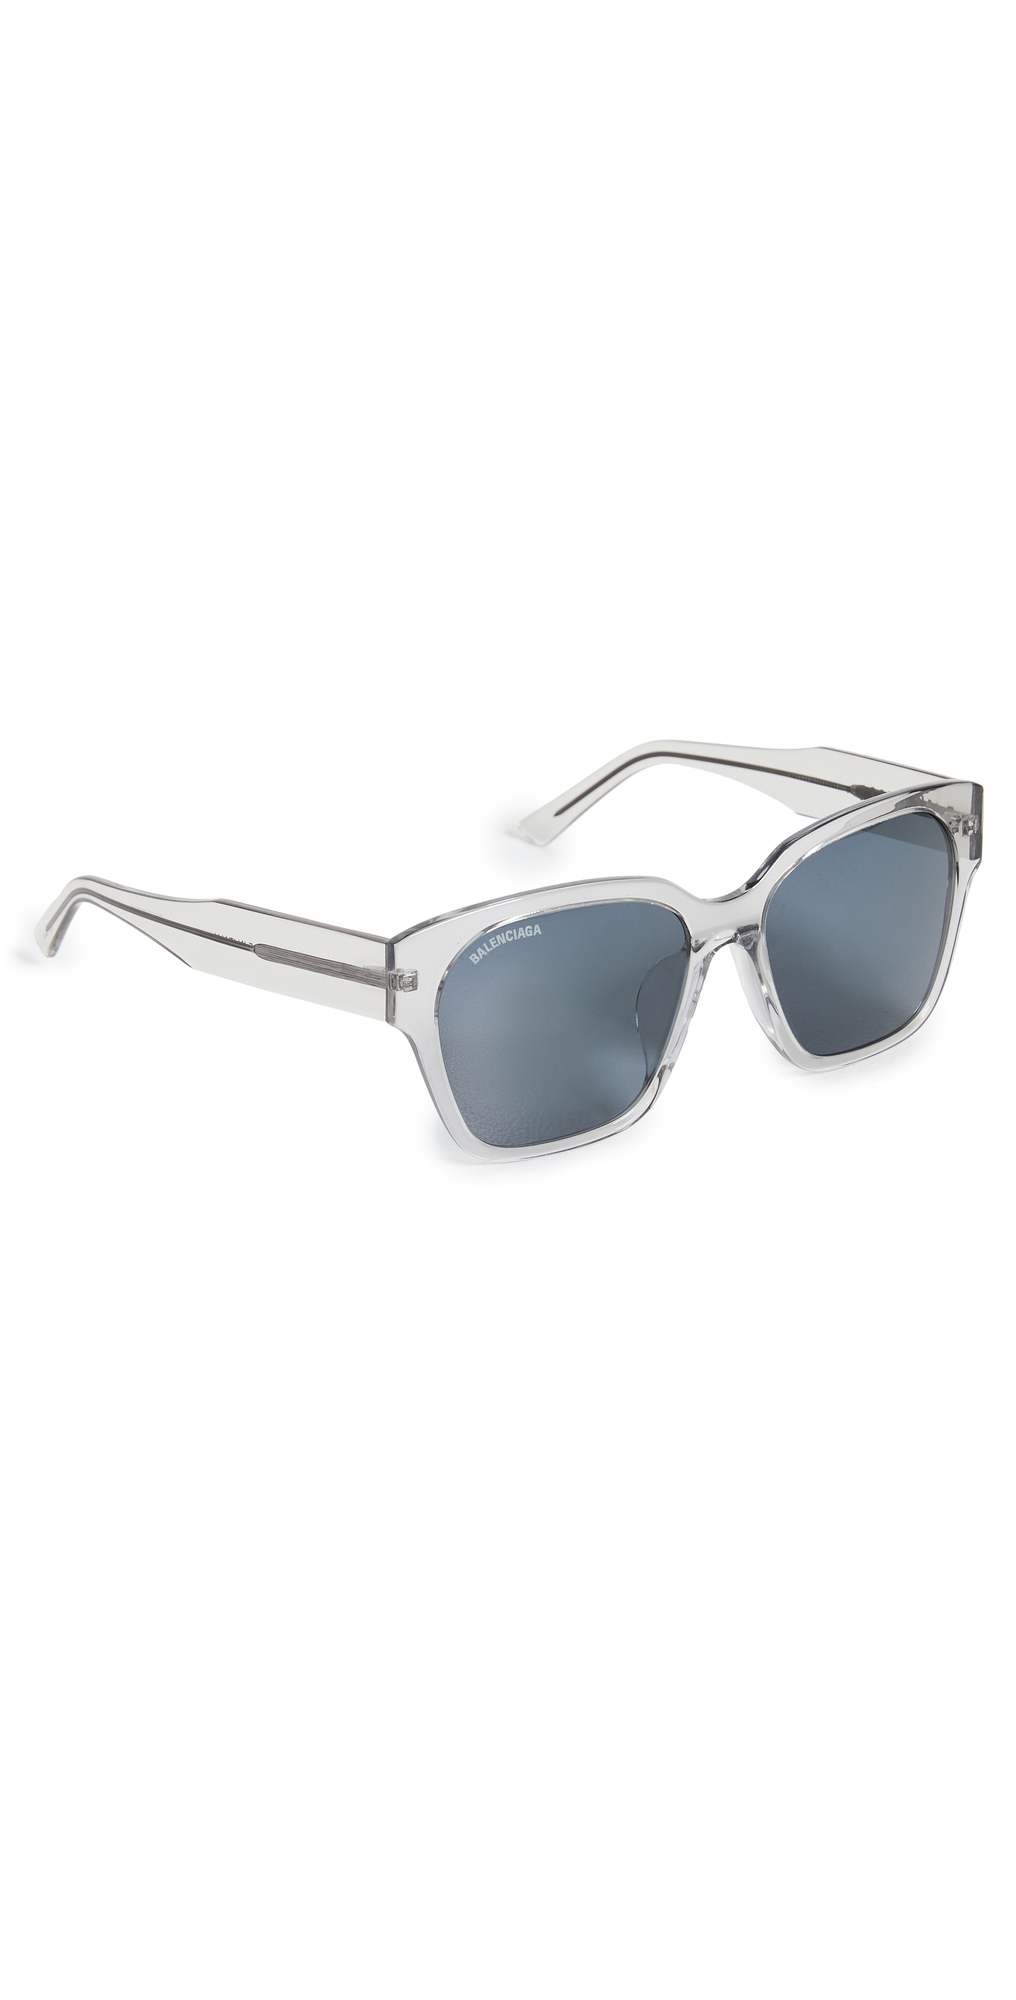 Balenciaga Flat Sunglasses in grey / transparent